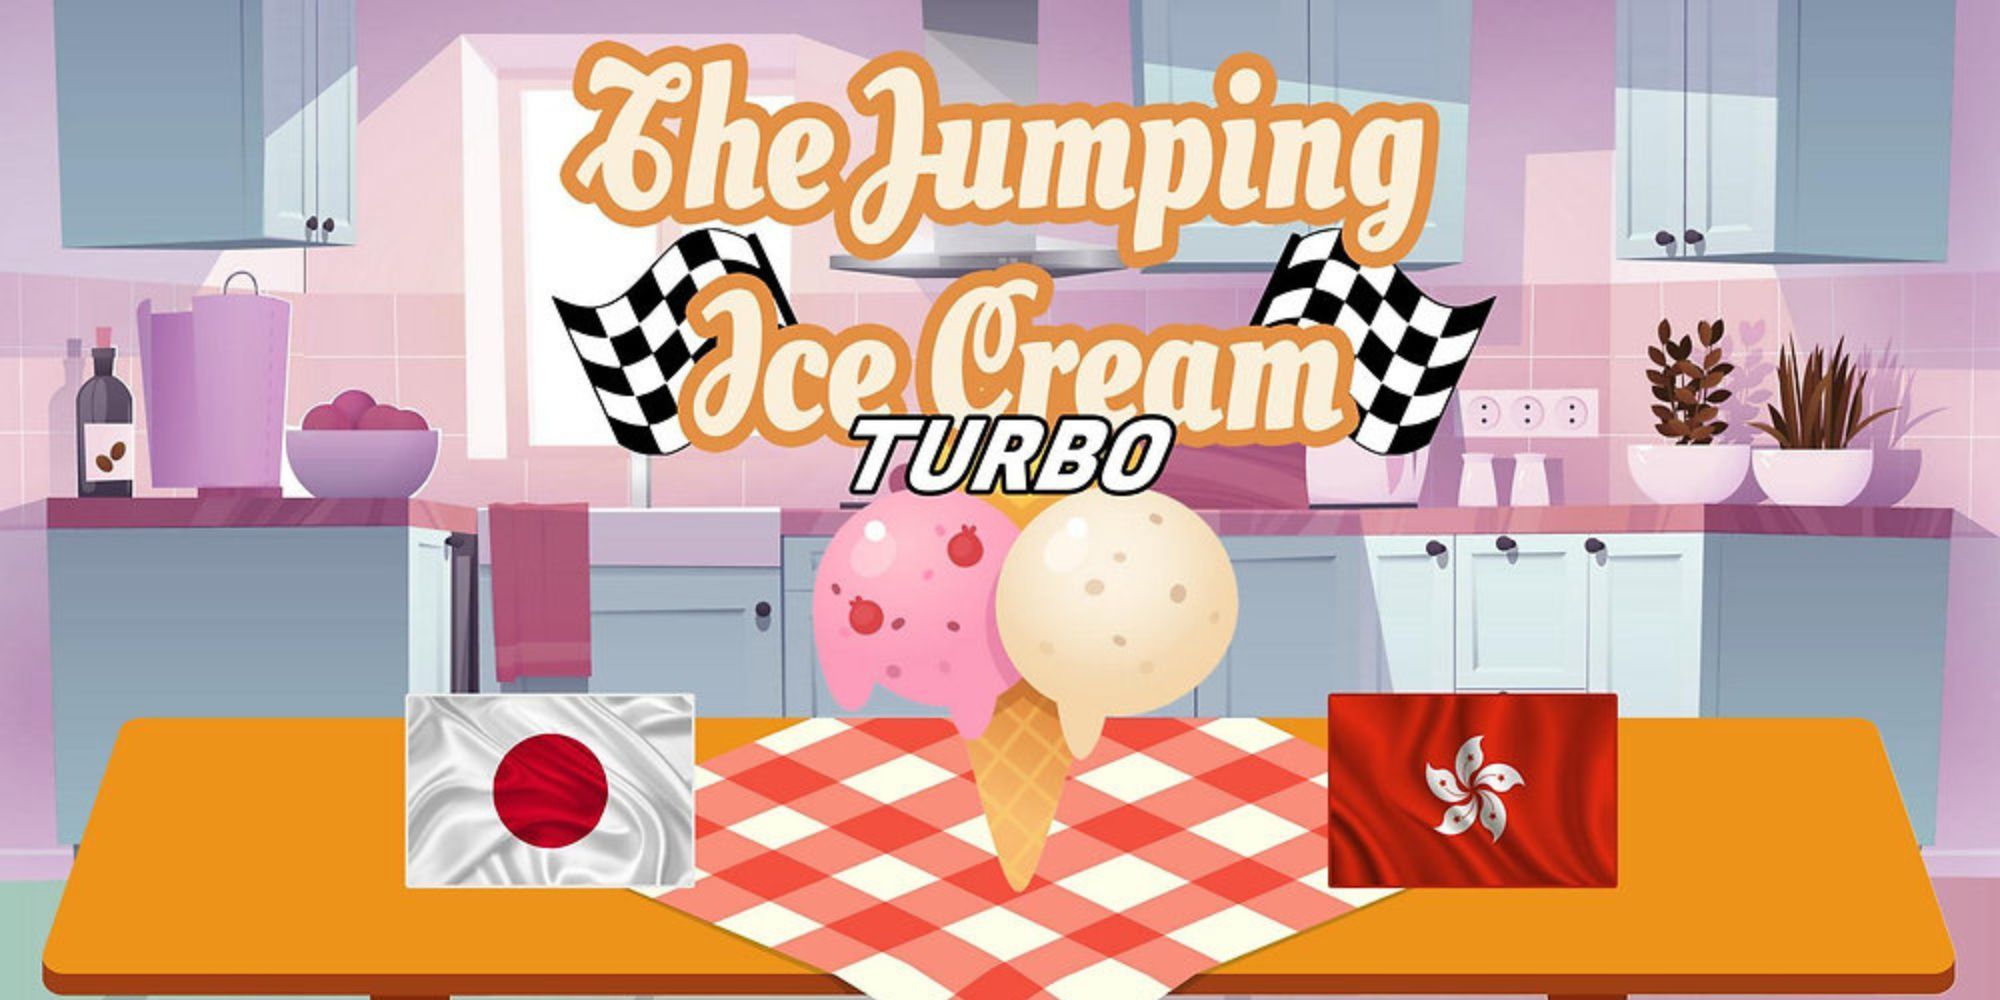 The jumping Ice cream Turbo